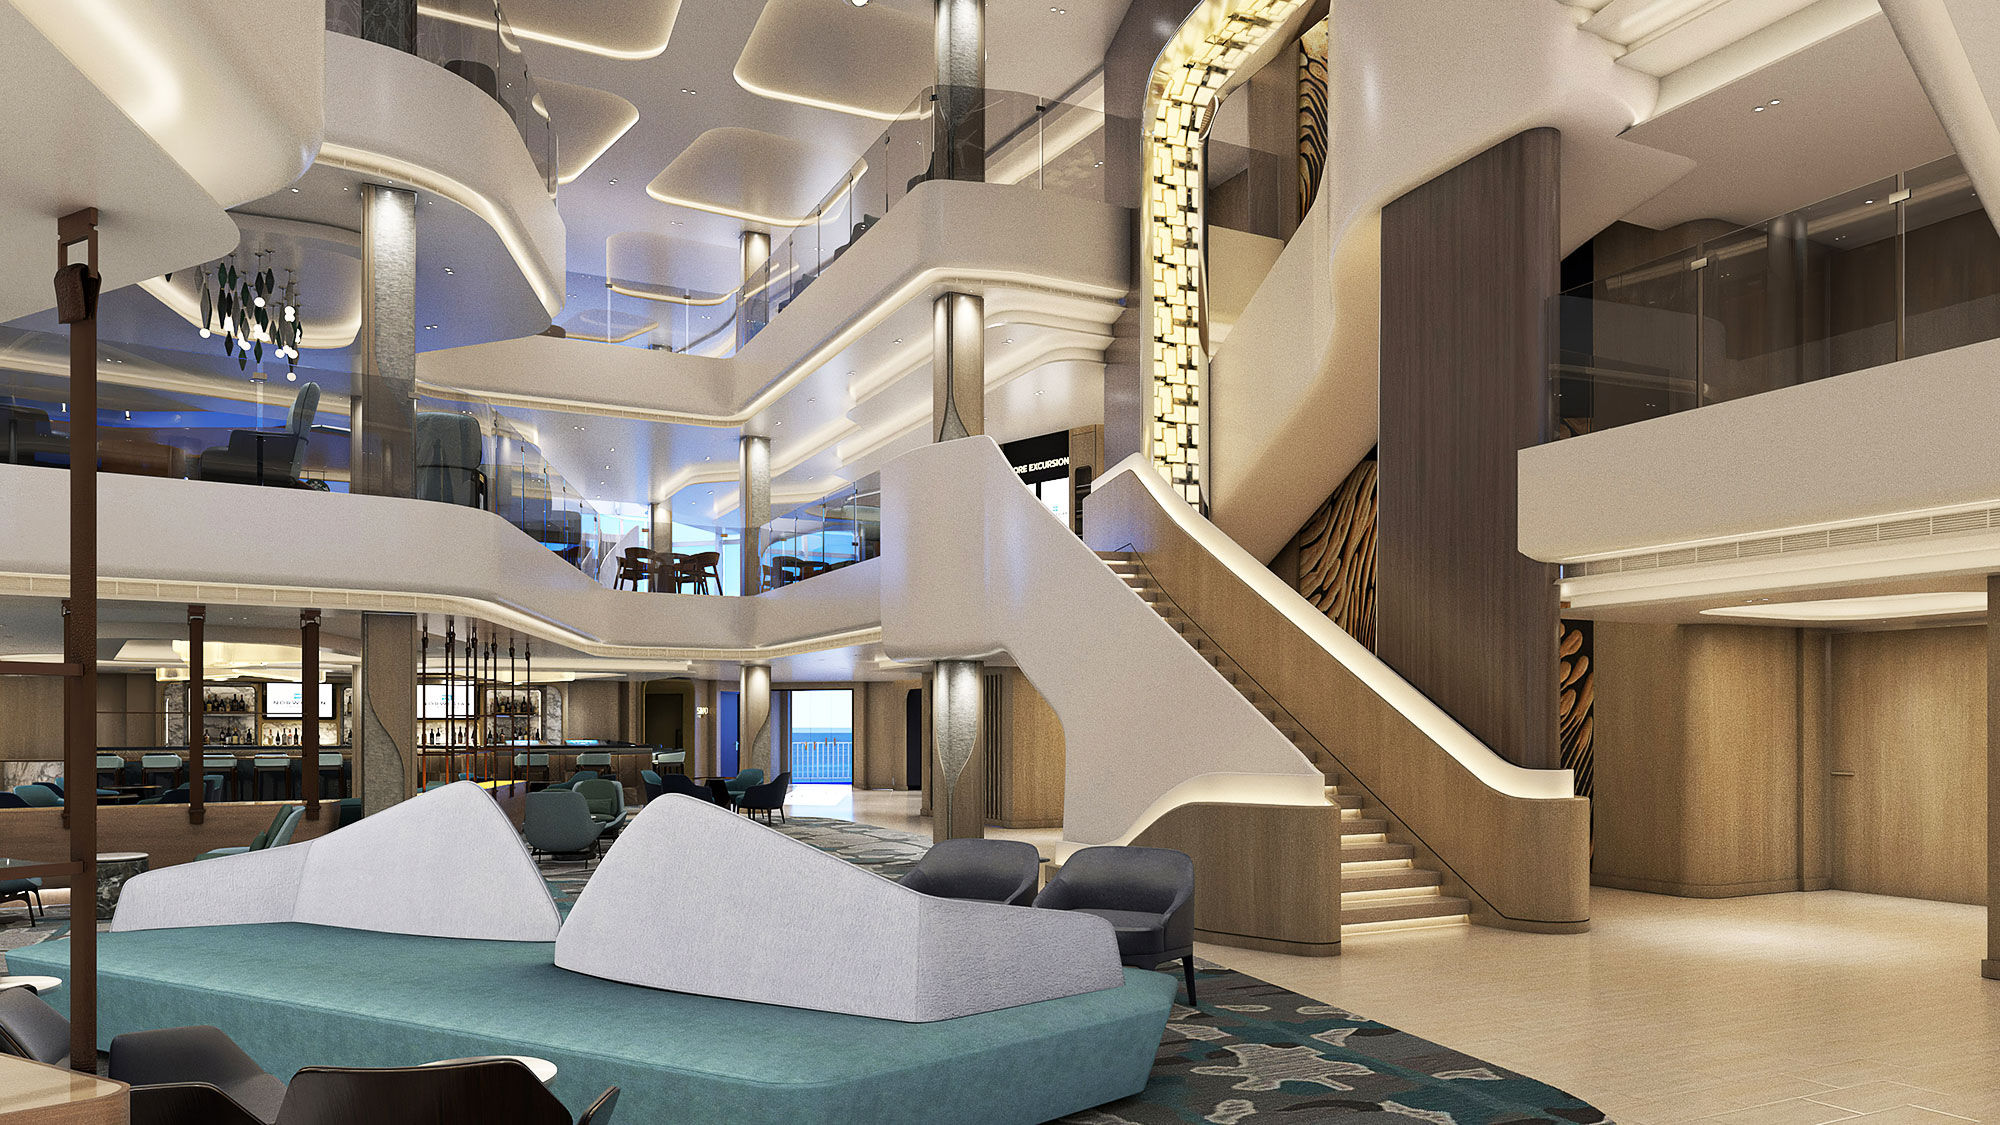 The Norwegian Prima will feature the three-story Penrose Atrium.